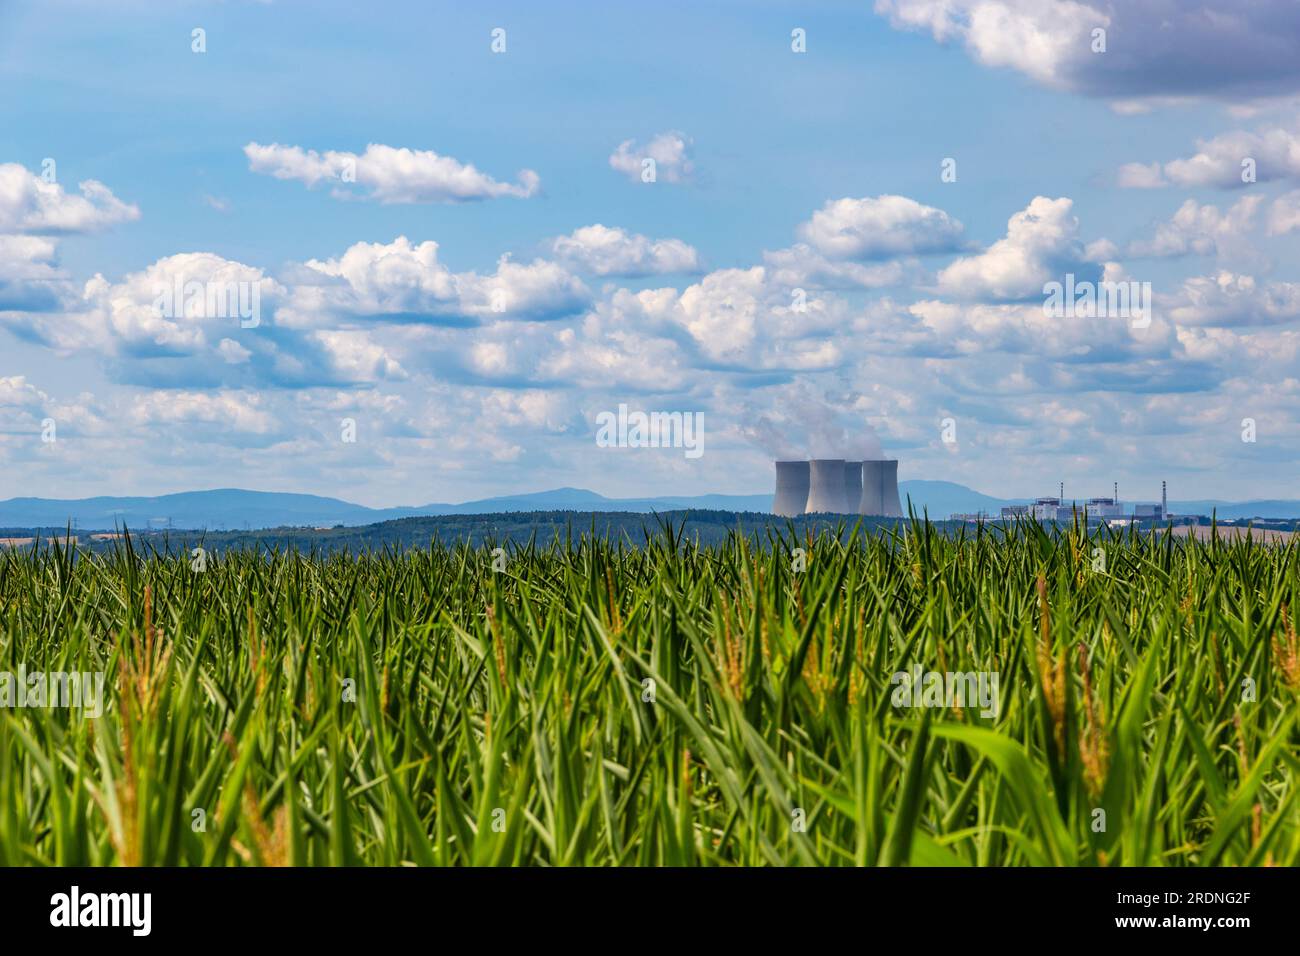 Corn field and Temelin nuclear power plant on the horizon Stock Photo ...